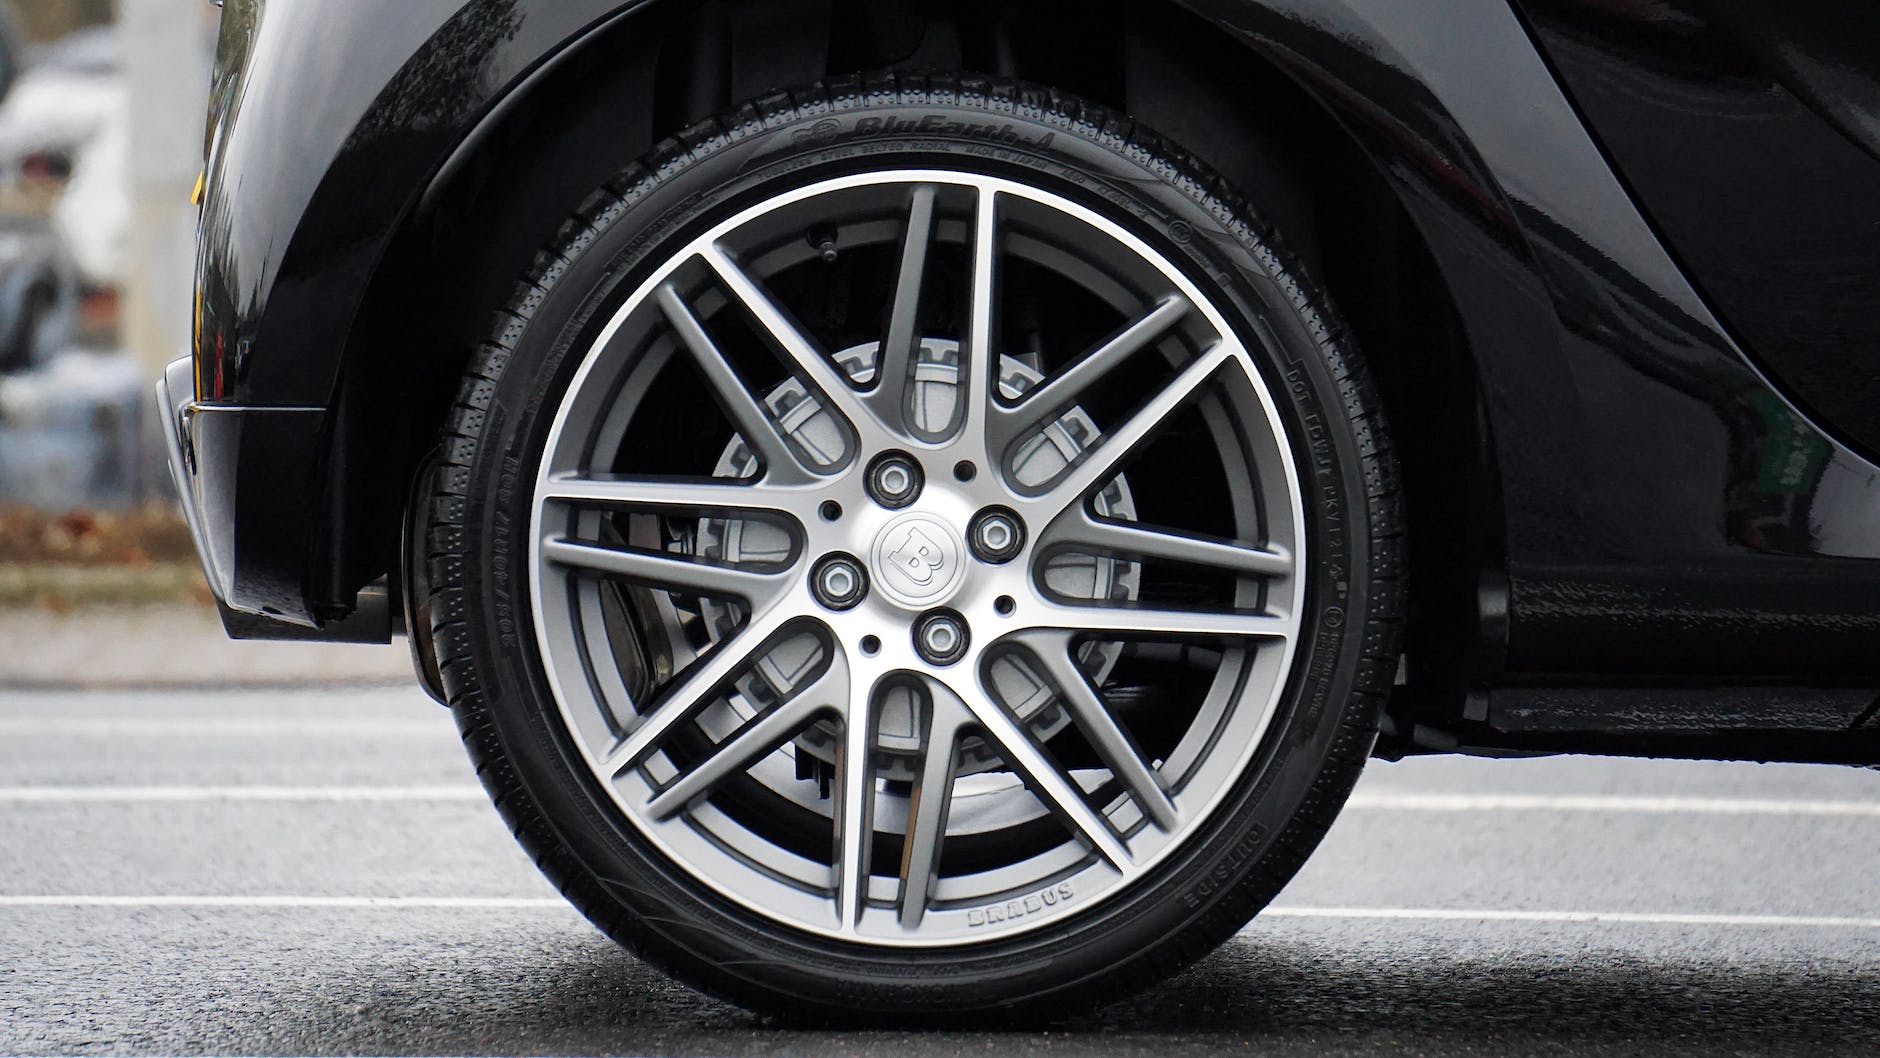 close up photograph of chrome vehicle wheel